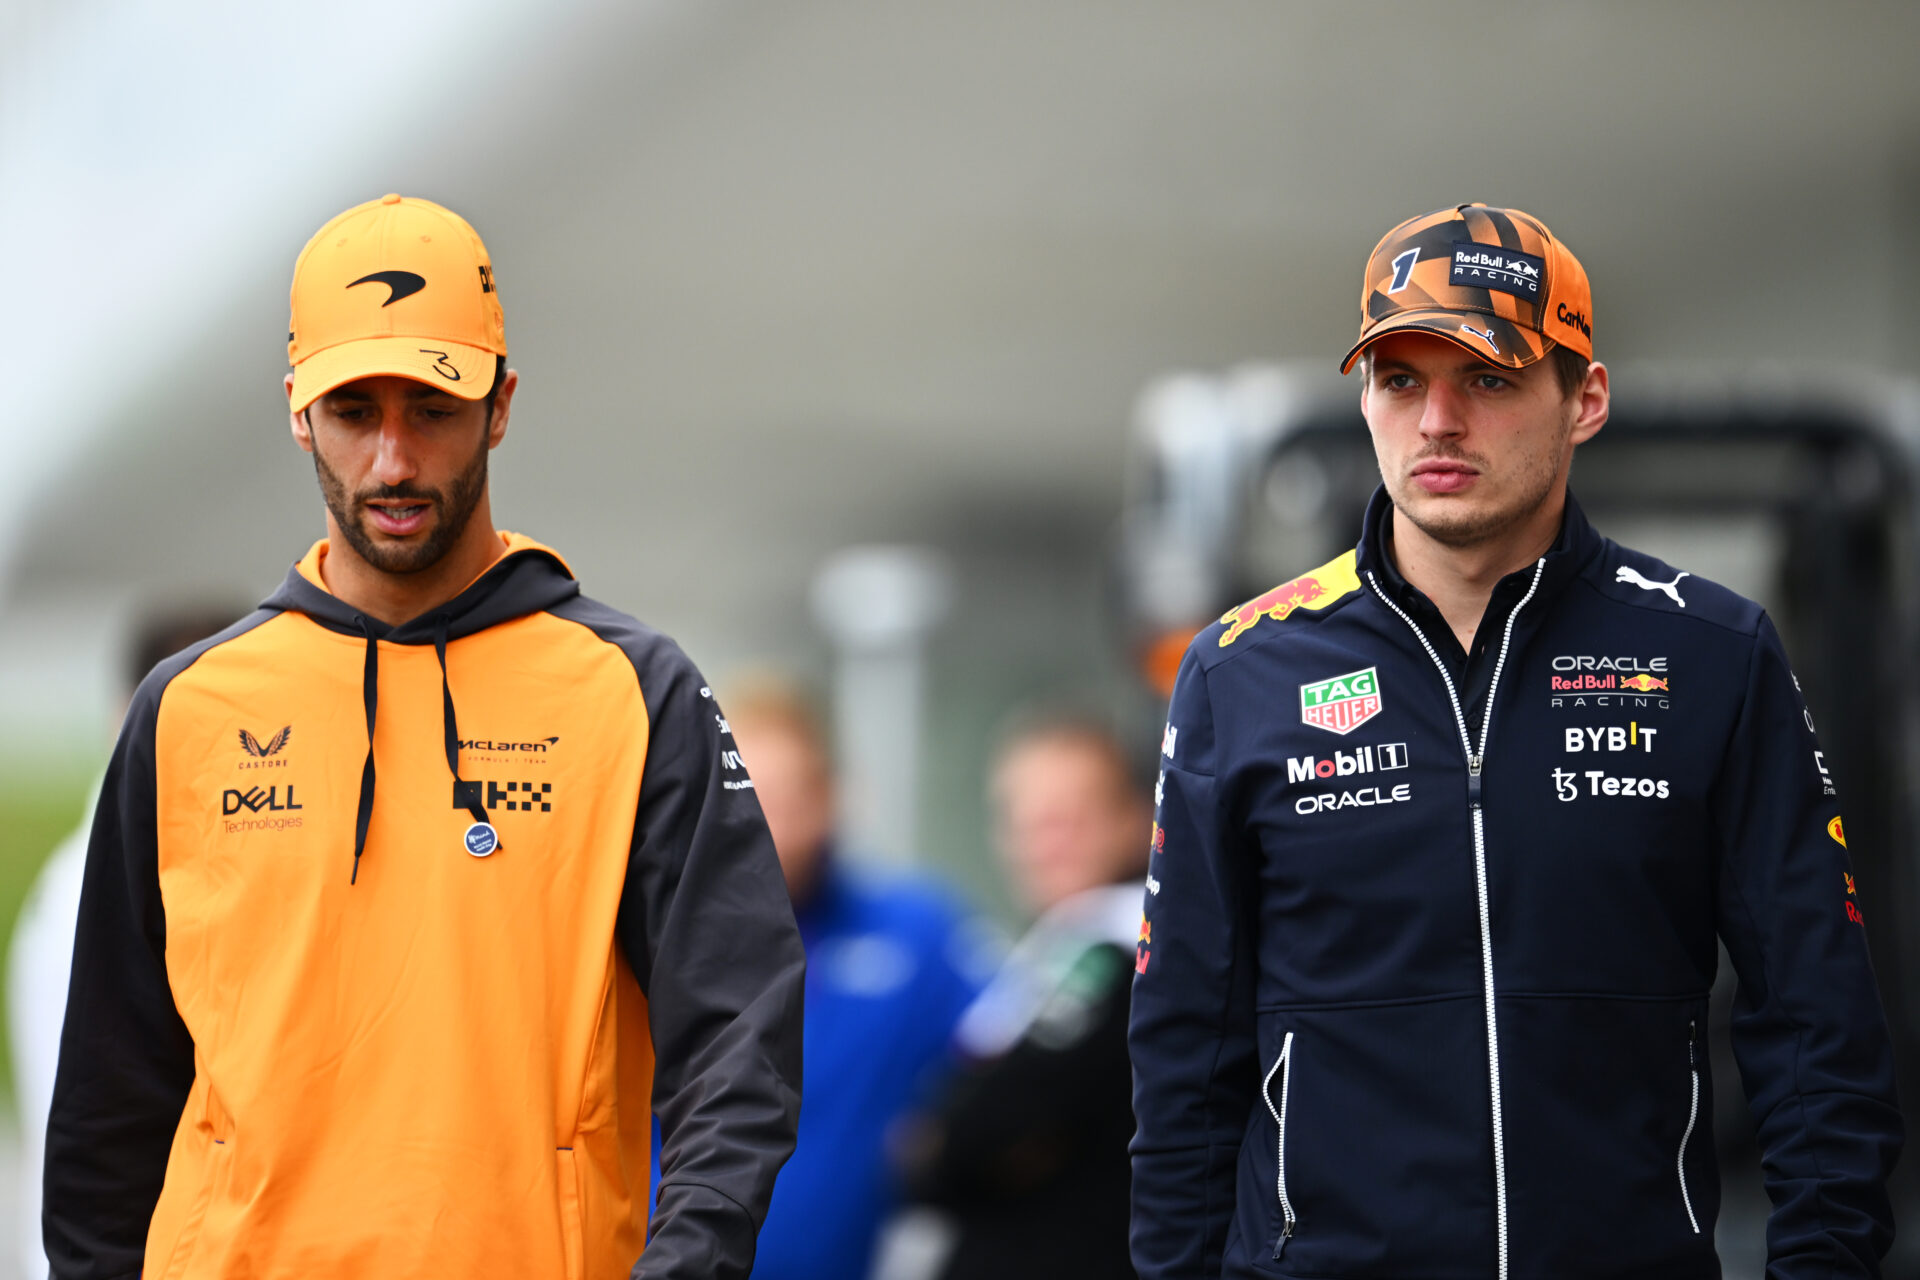 F1 - Le patron de Red Bull confirme des discussions avec Ricciardo